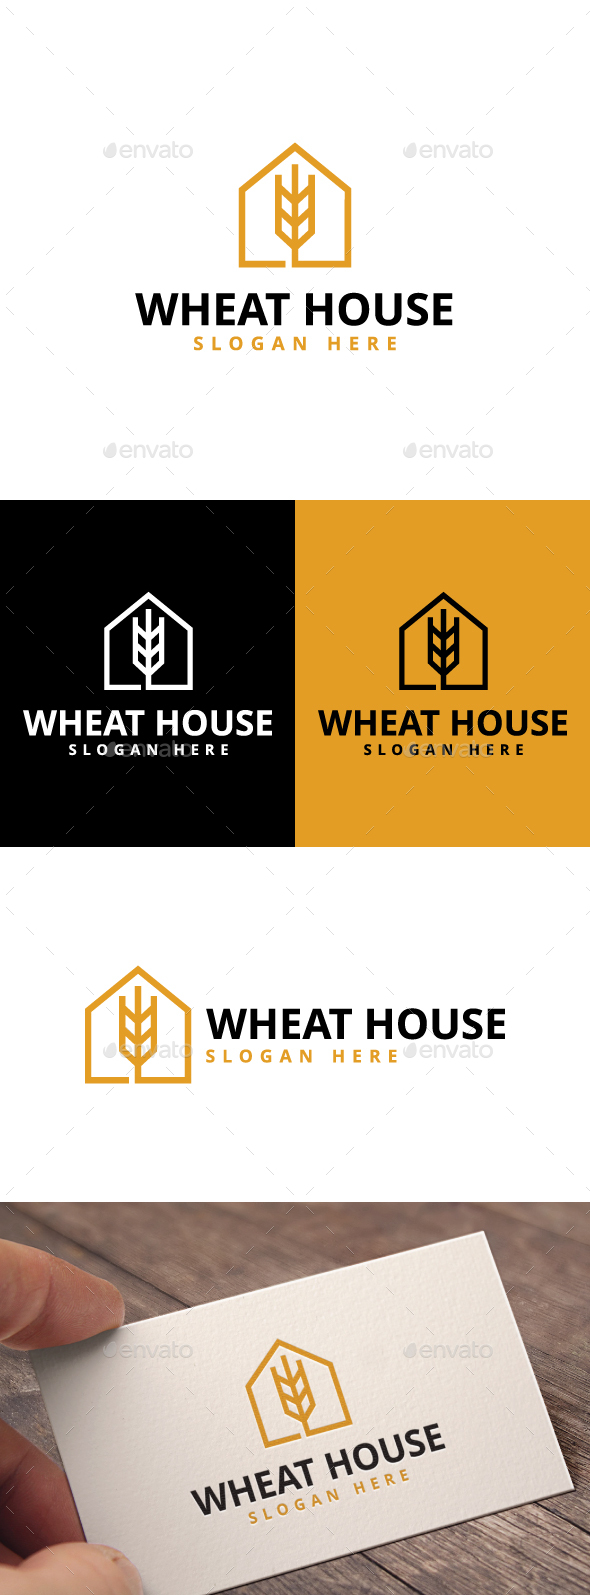 Wheat House - Home Logo